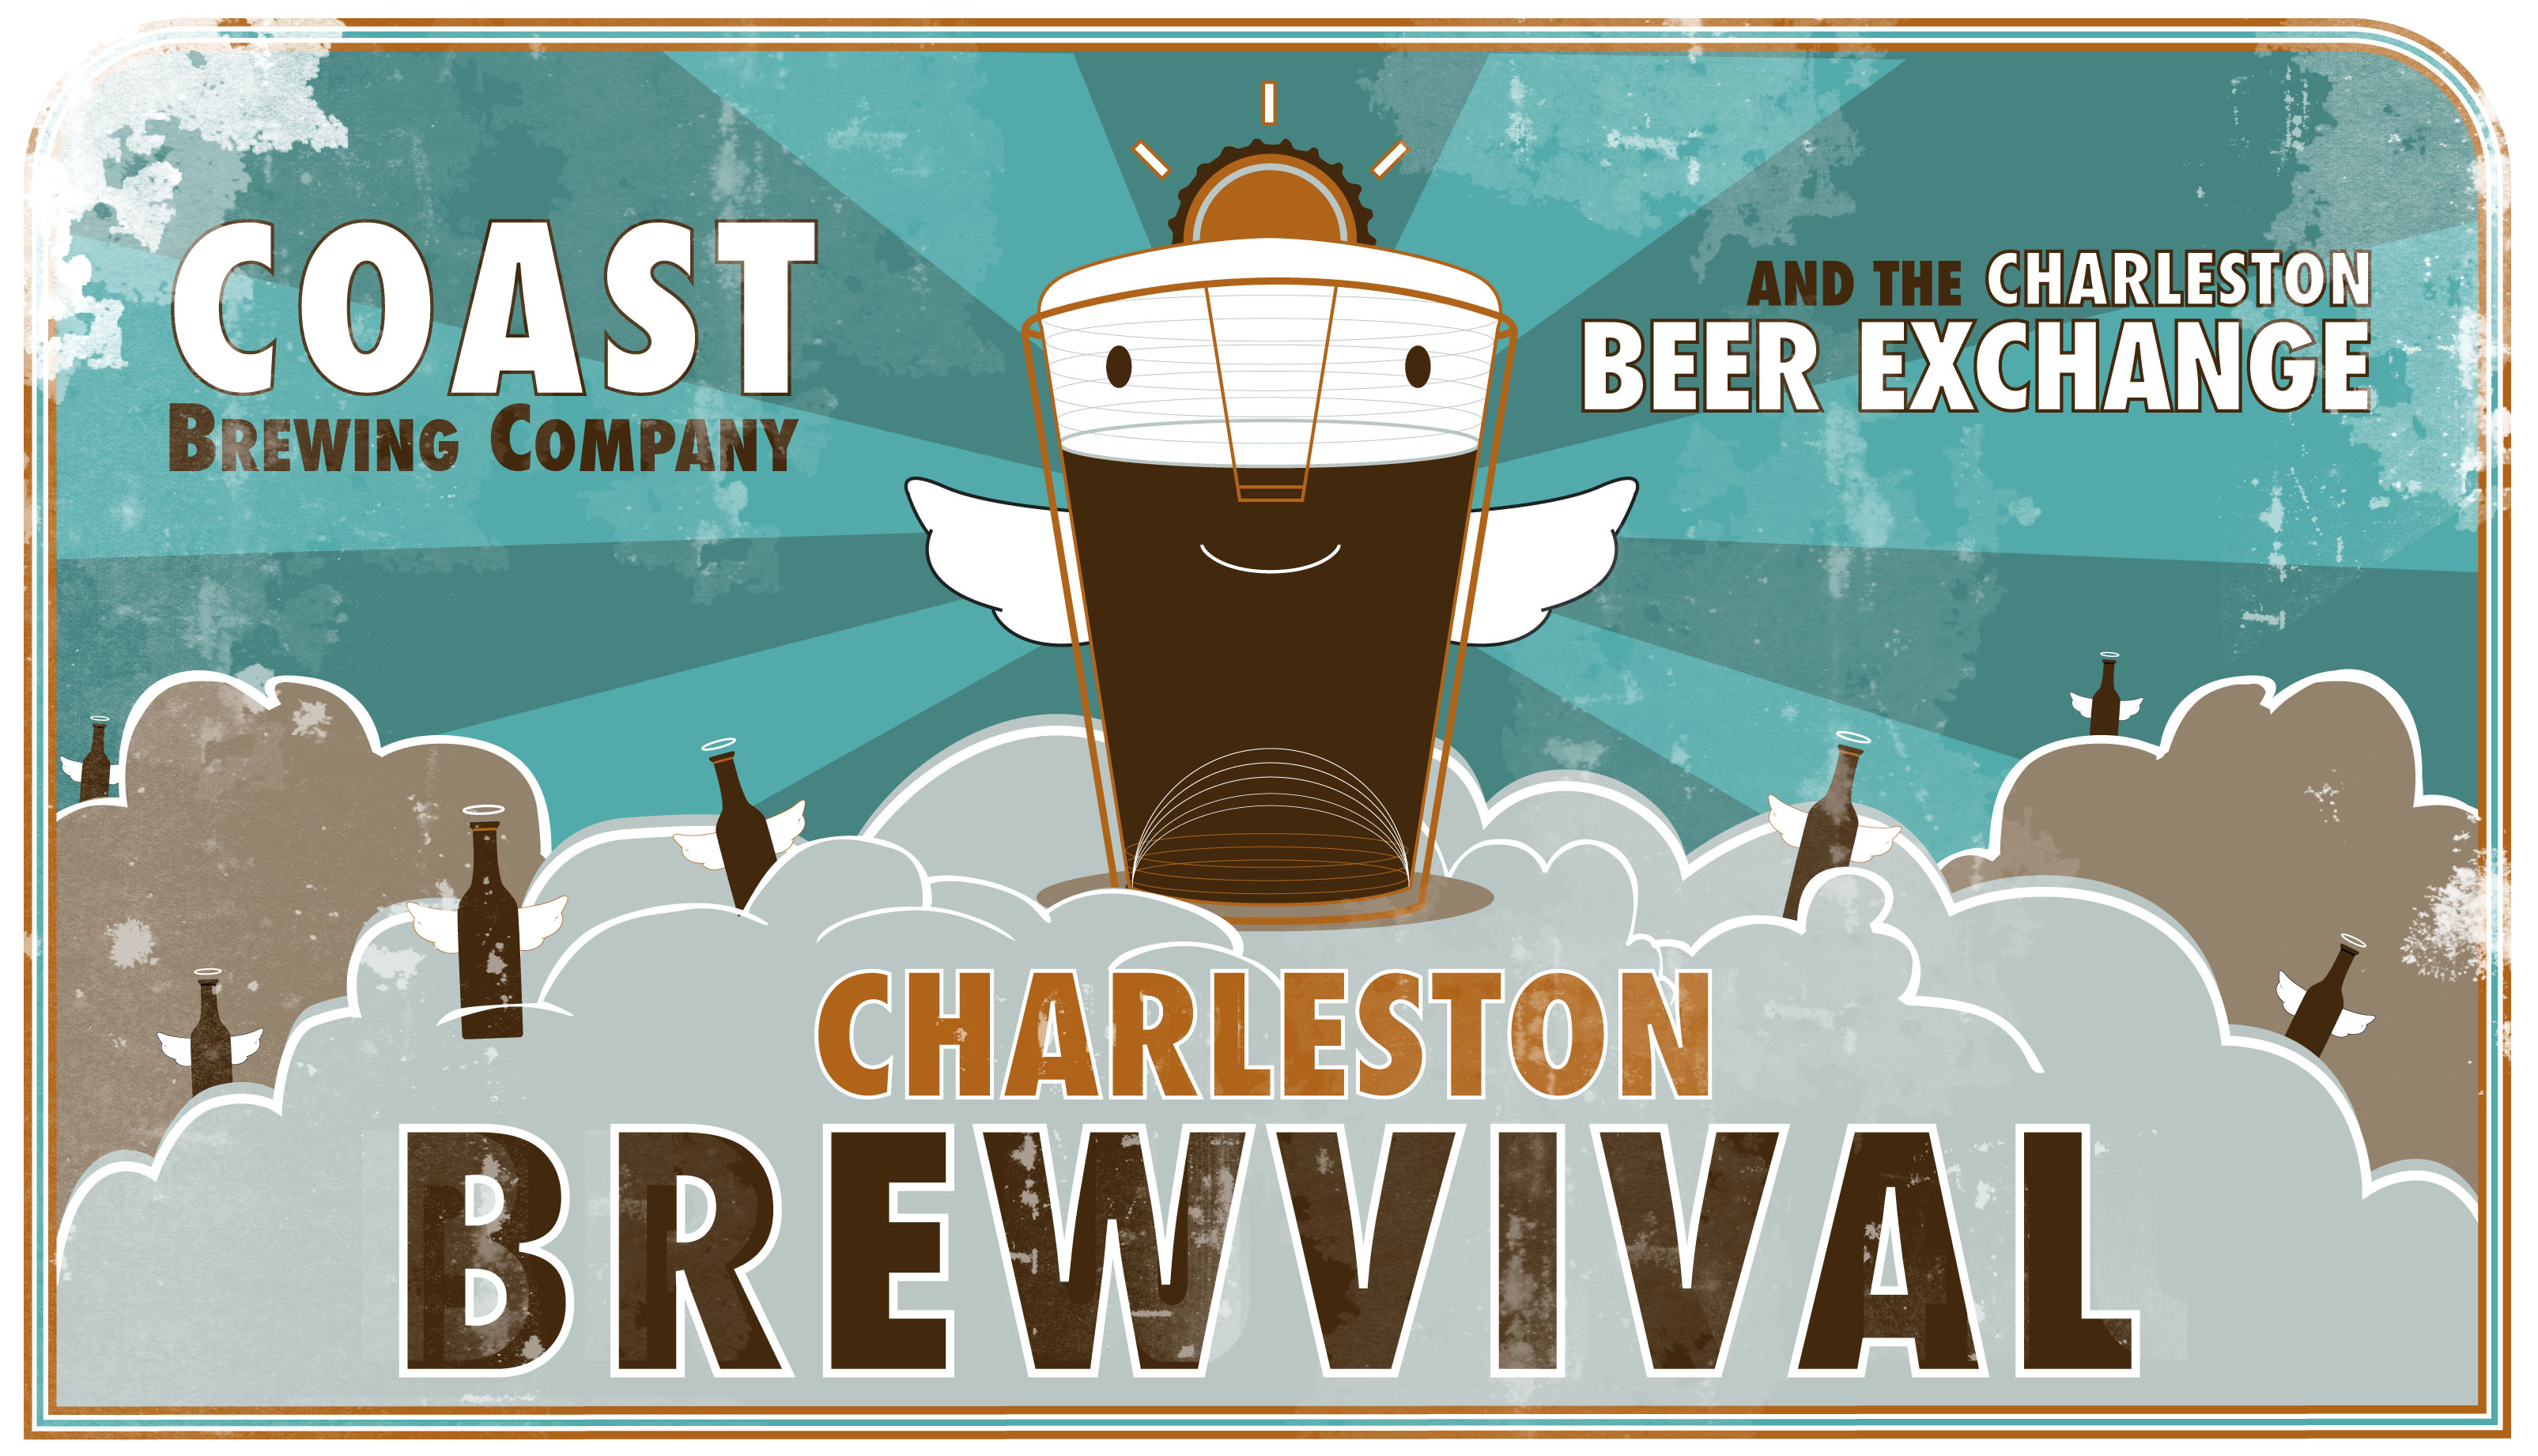 Charleston Brewvival 2015 - Coast Brewing Company